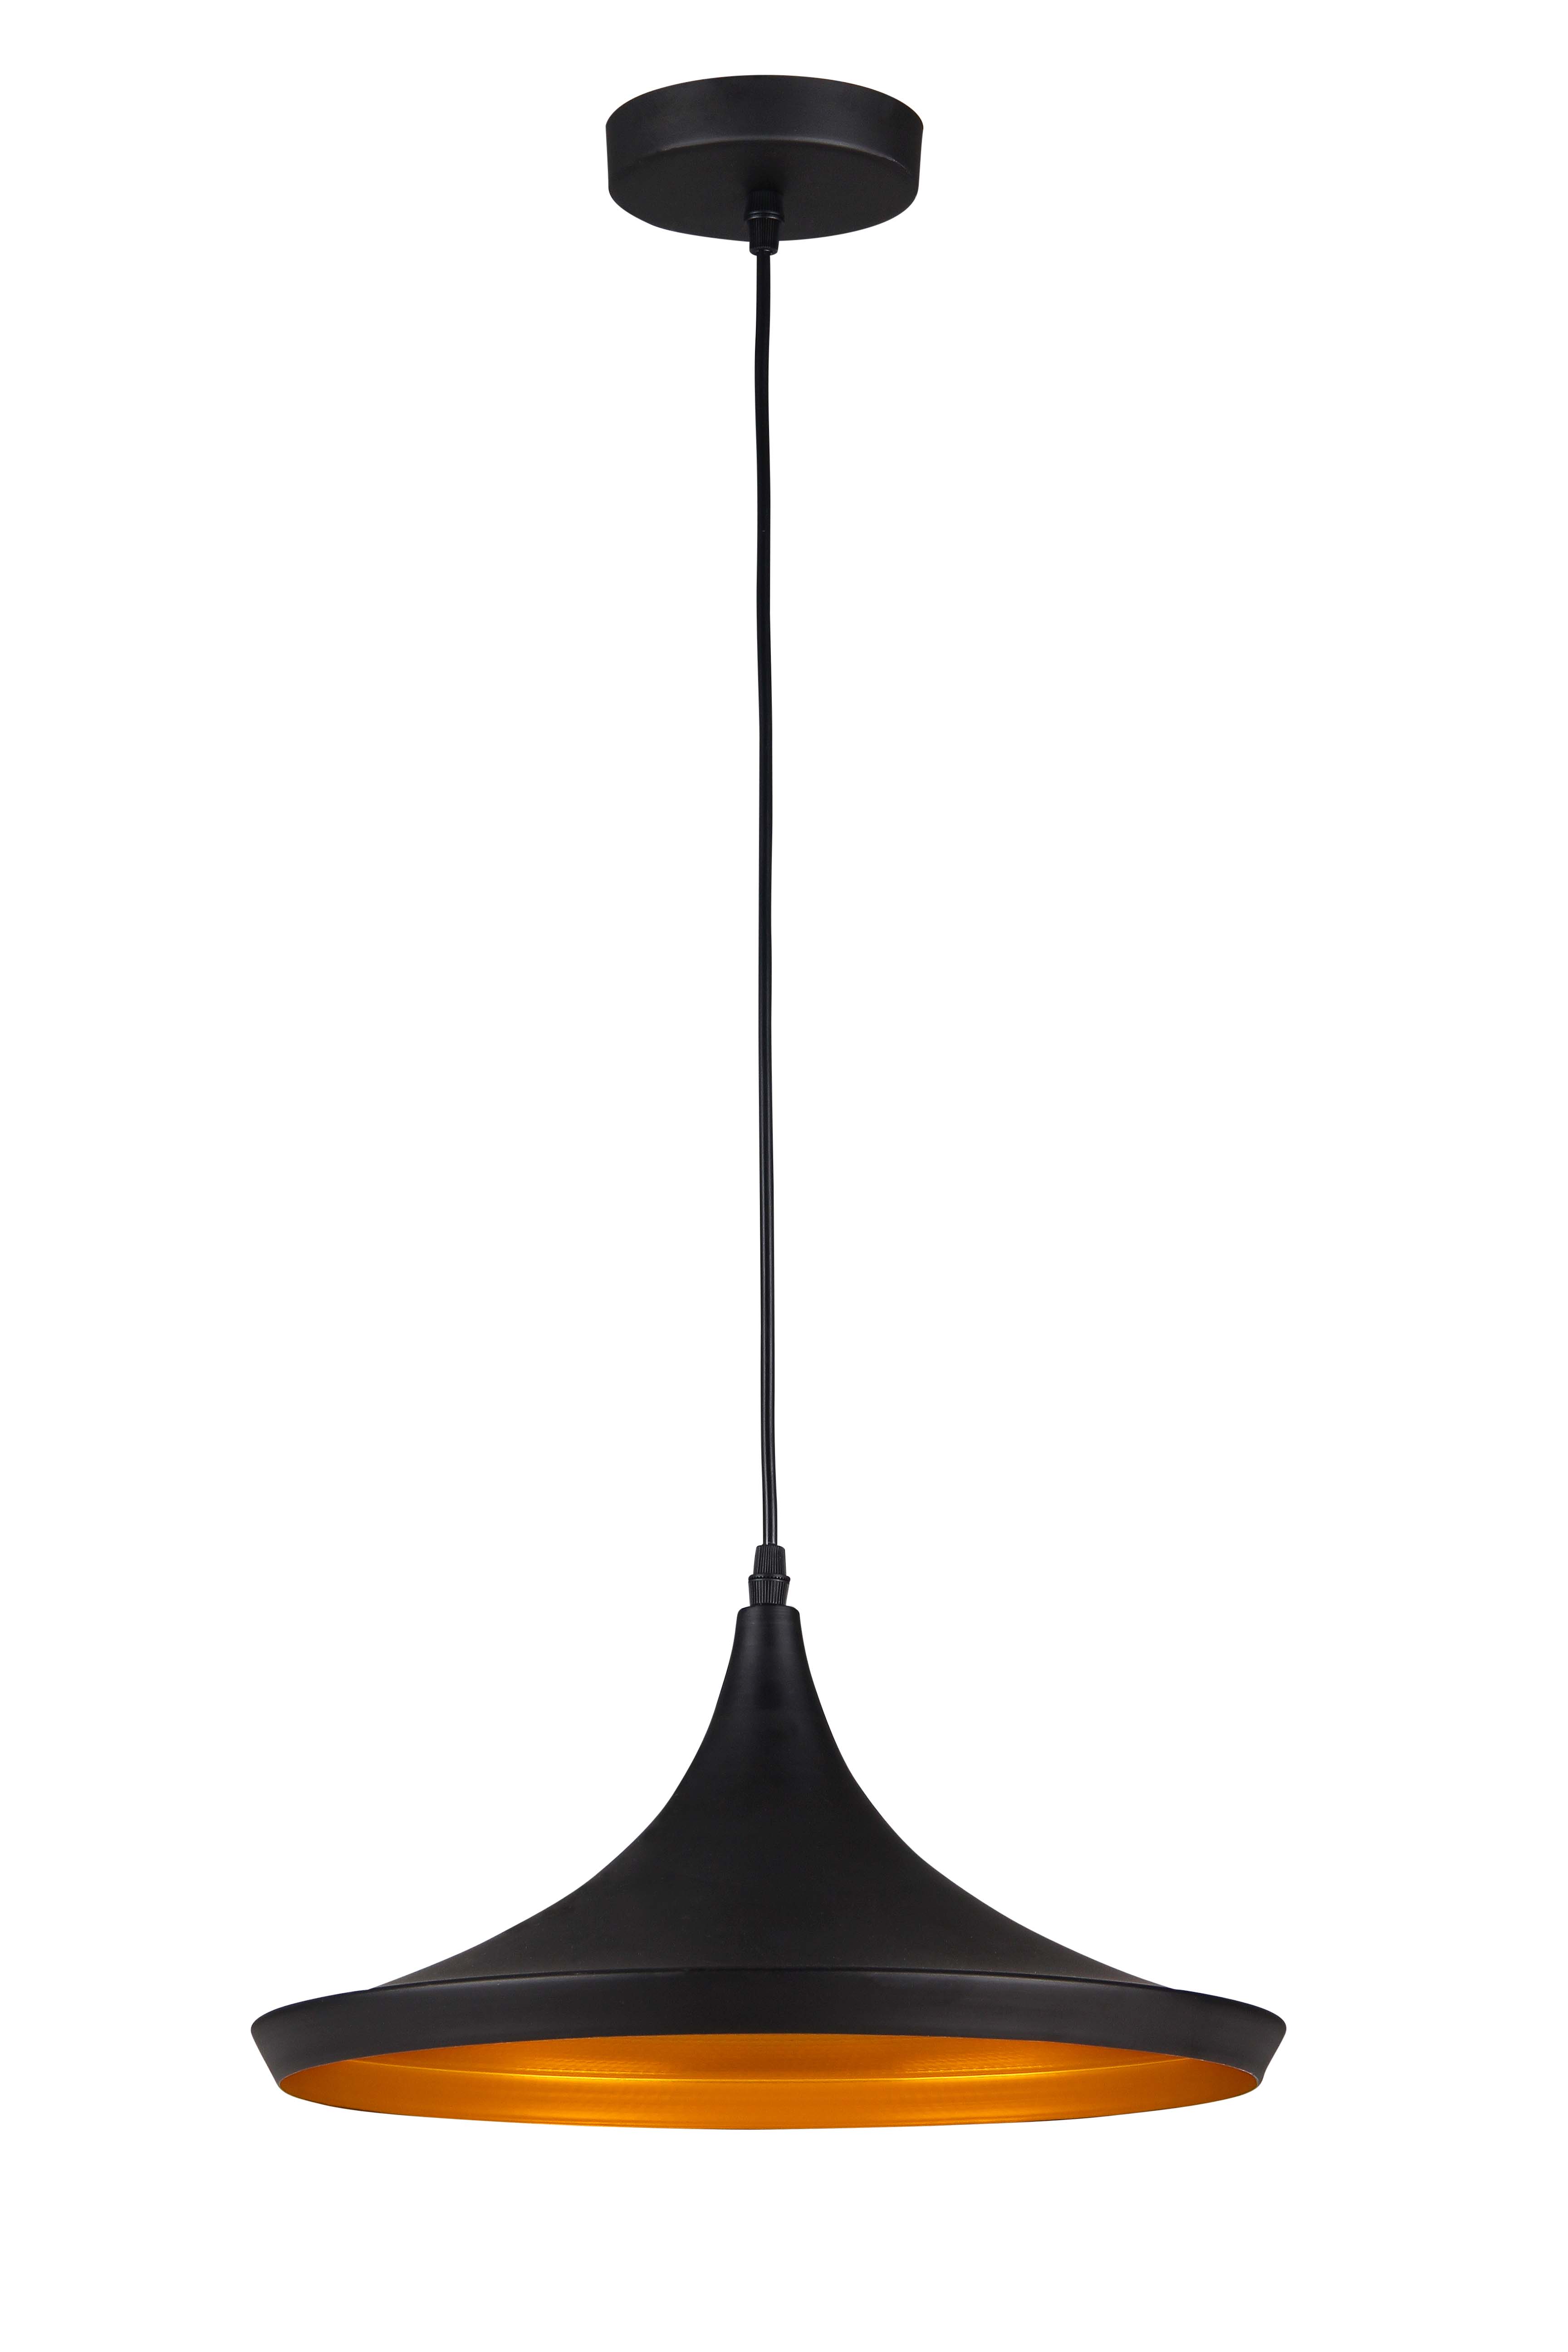 P1094BK E27 pendant light Modern Vintage Aluminum Black hanging lamp